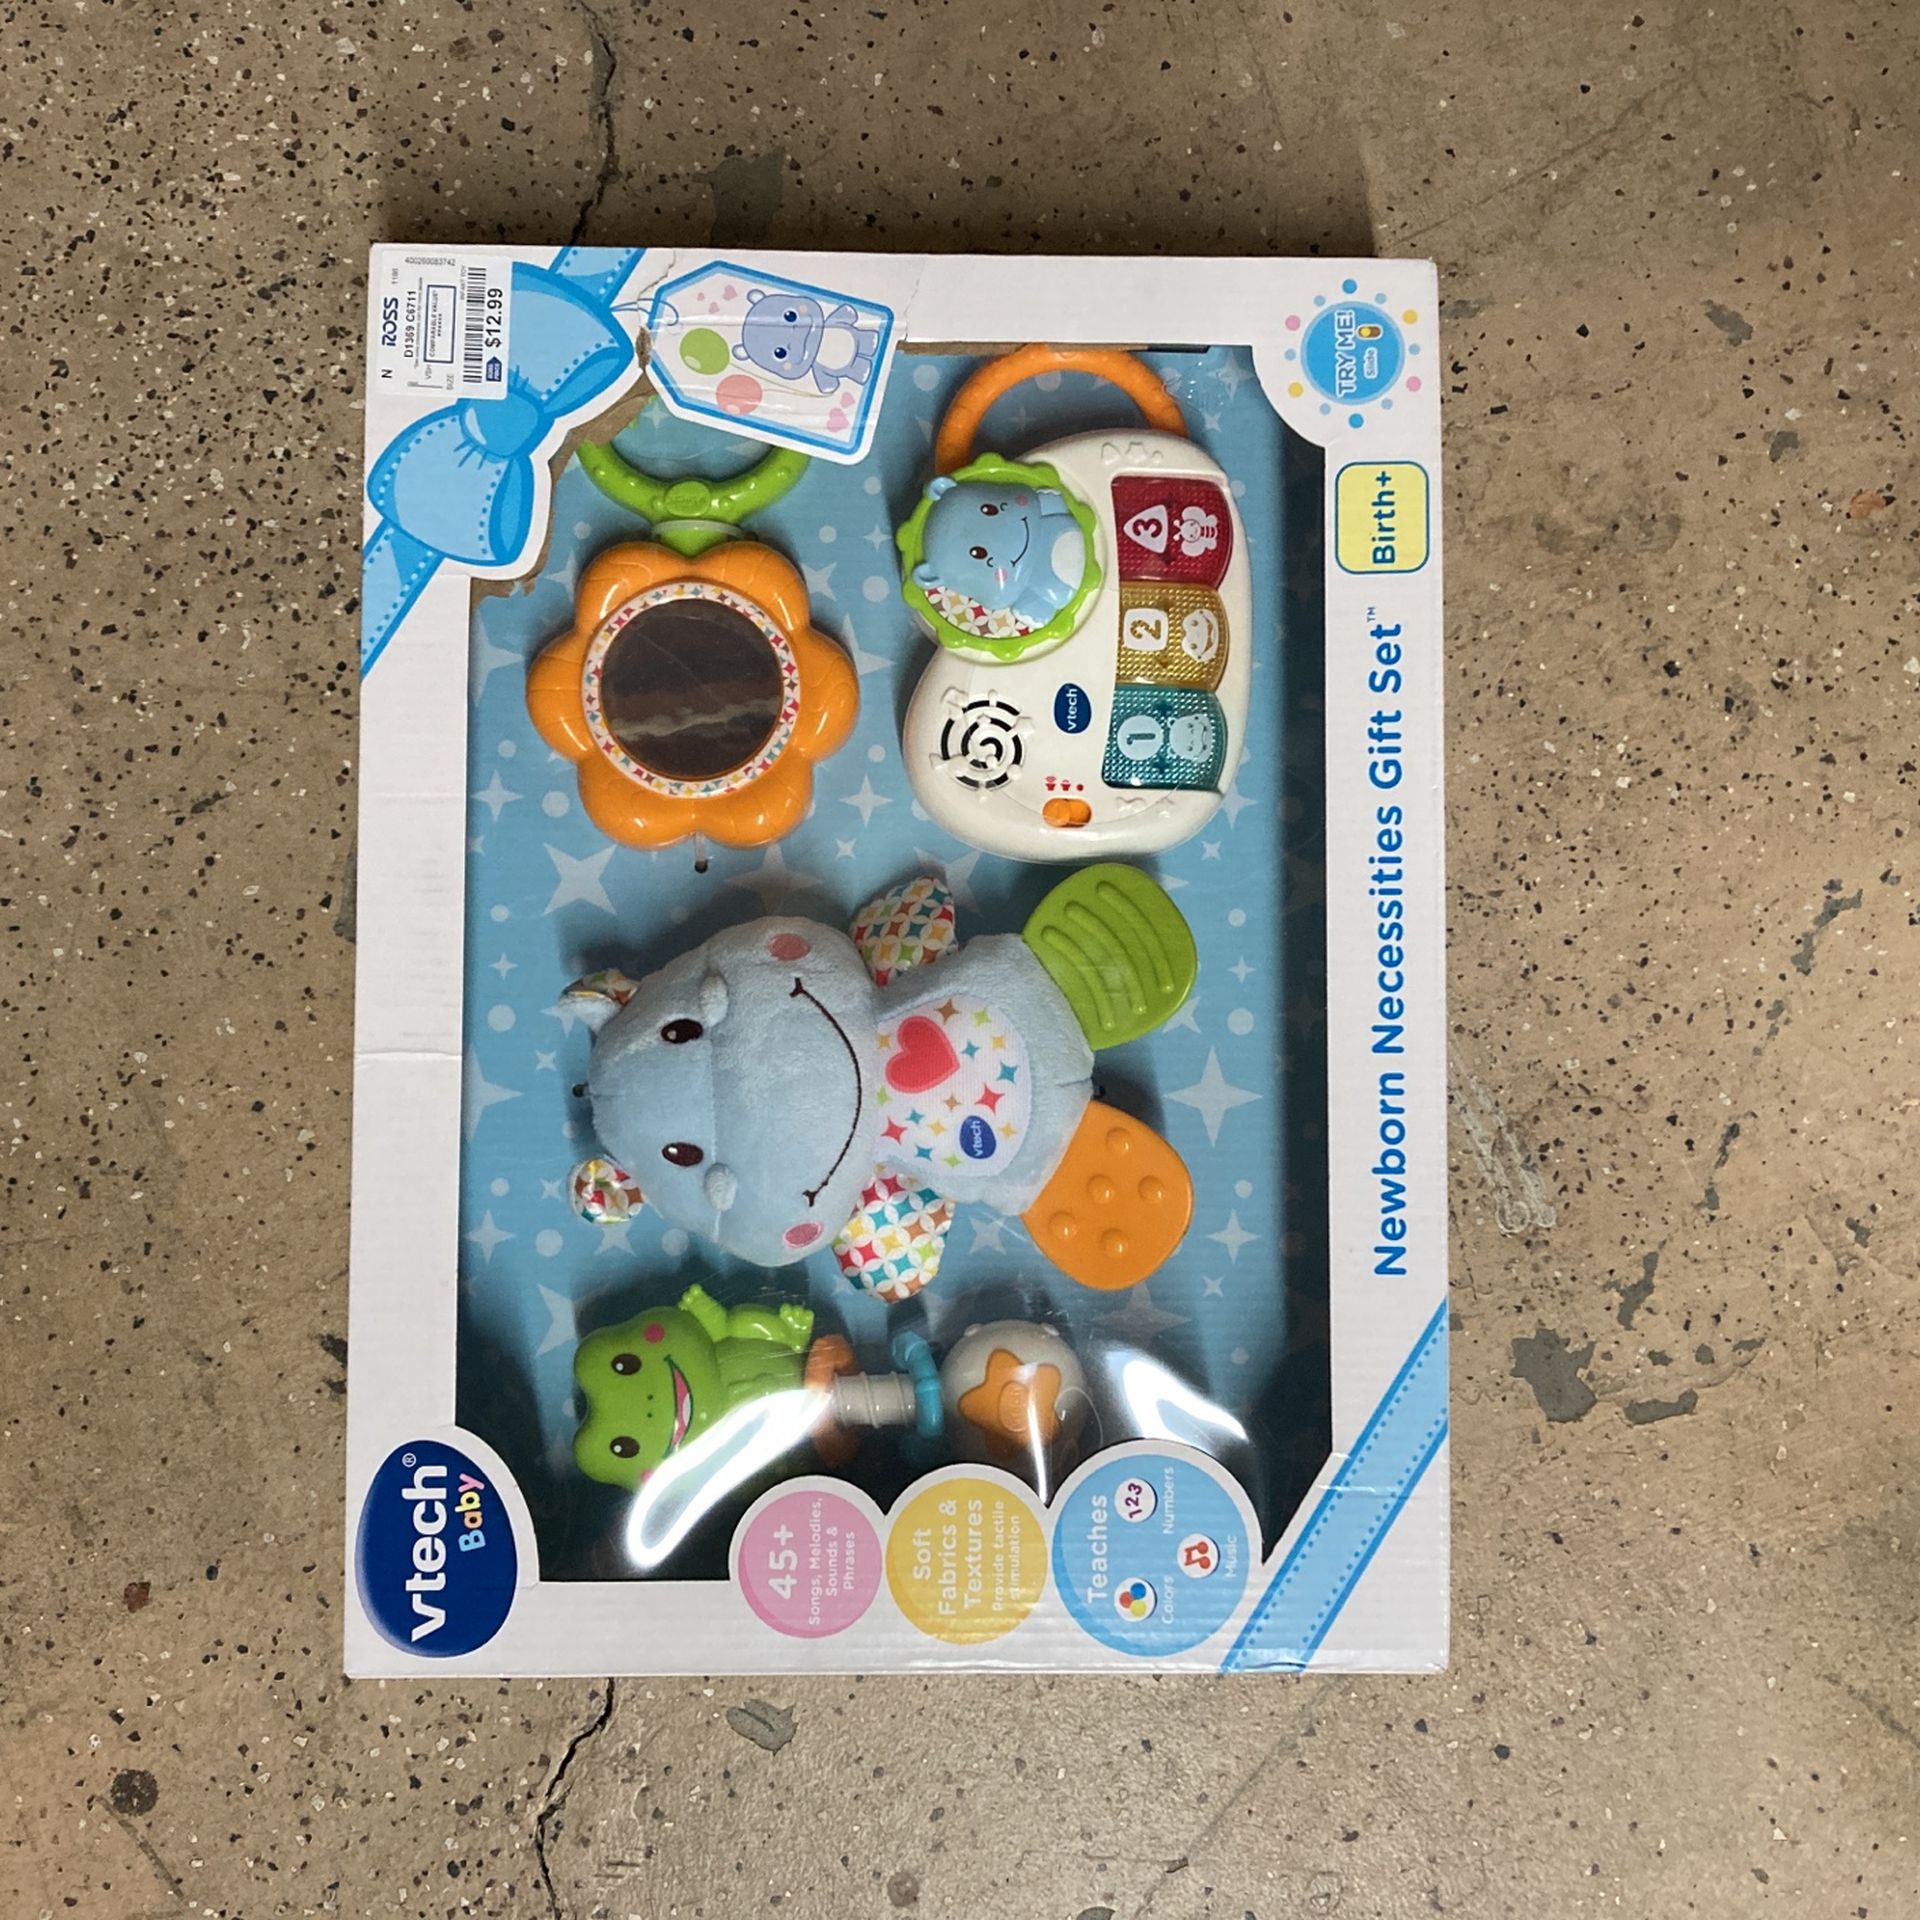 Brand New In Box Vtech Baby Toy